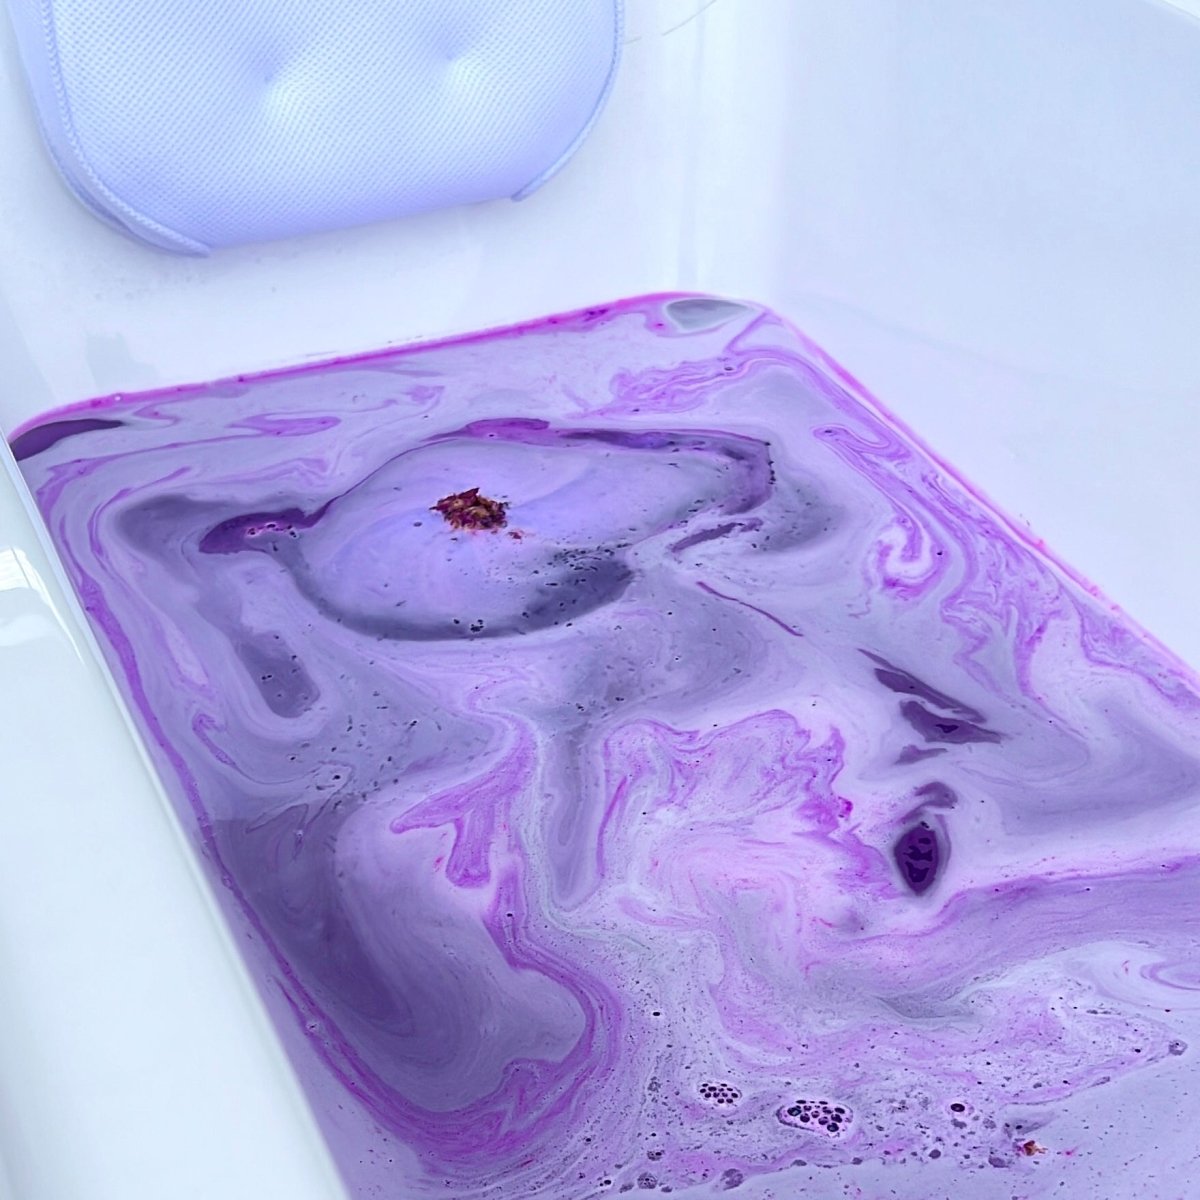 Shut Eye Sleep Bedtime Bath Bomb for Kids & Adults - Colourful Glitters & Lavender Fragrance - Made in Australia by Bath Box